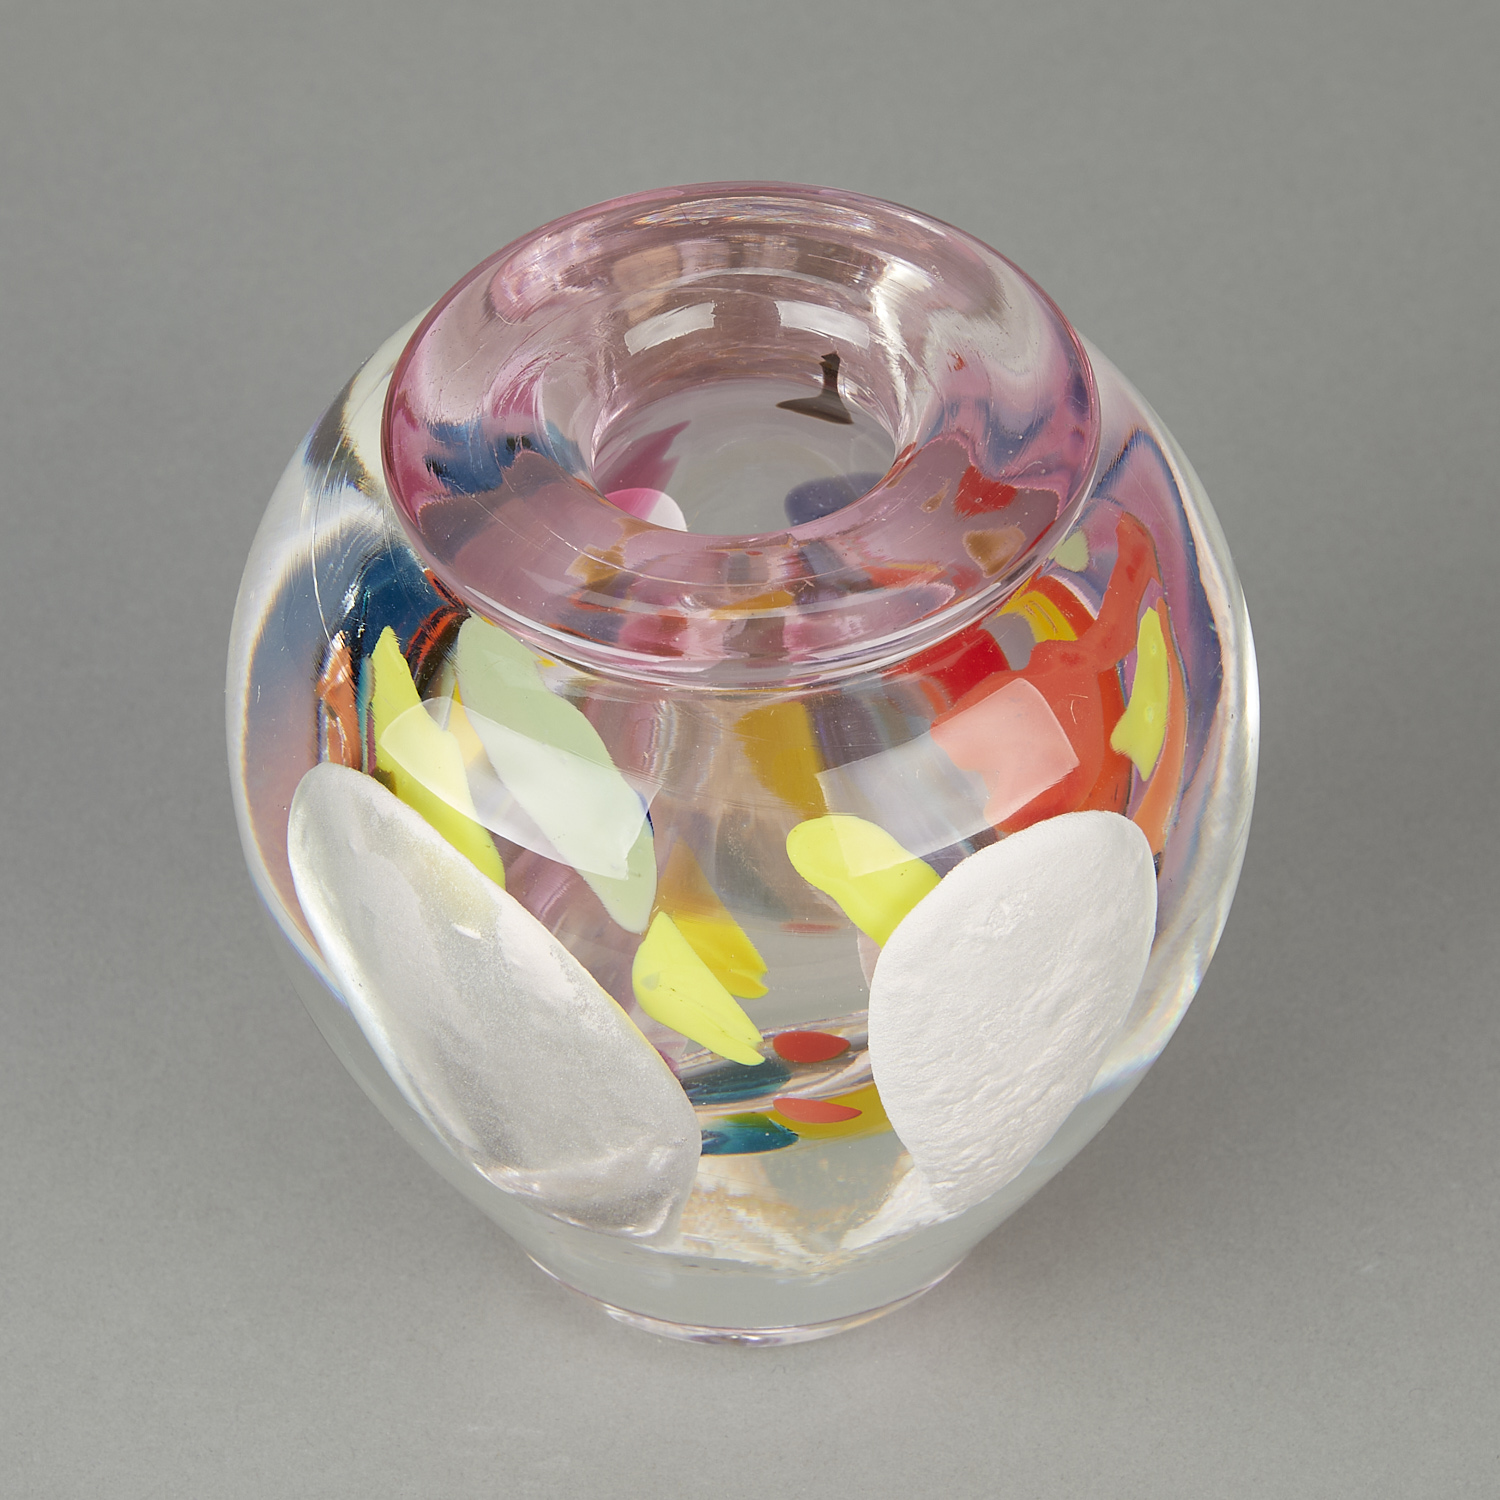 Jean-Claude Novaro Handblown Glass Vase - Image 7 of 9